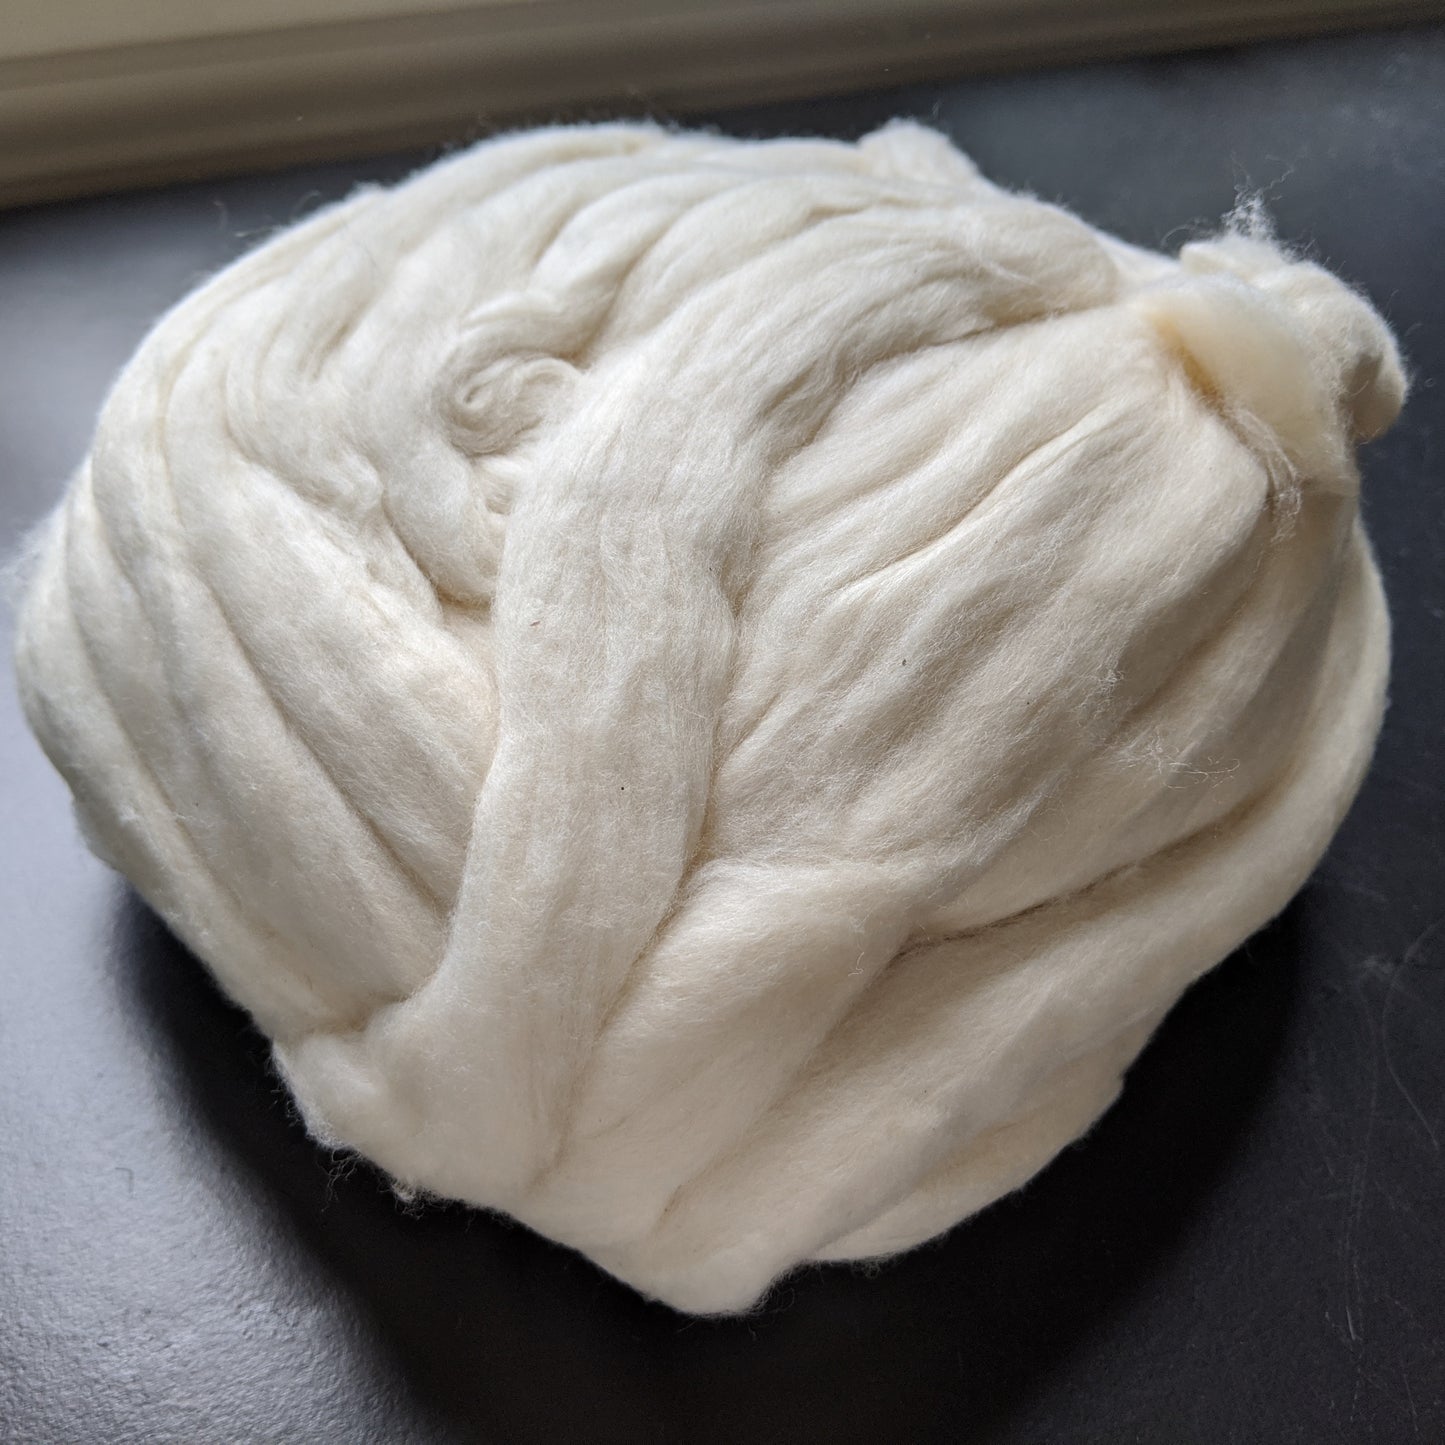 EZ Spin Pima White Cotton Carded Sliver - 4 ounces